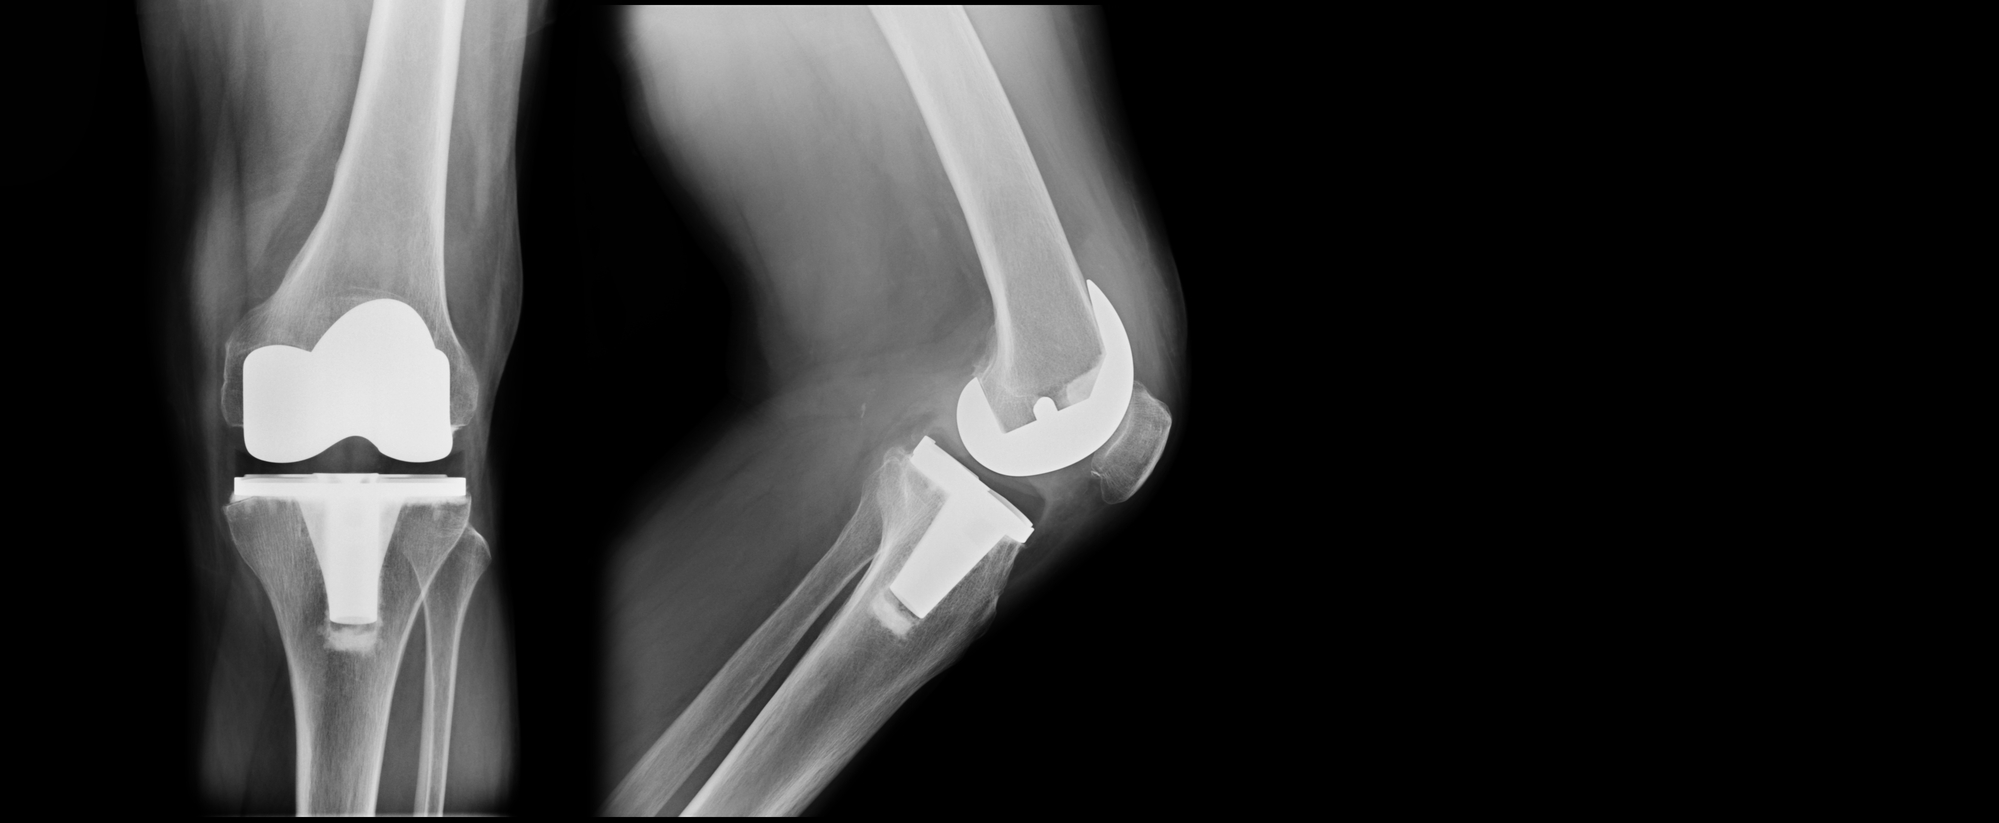 Dr. Germanuel Landfair explains 10 essential post knee replacement exercises